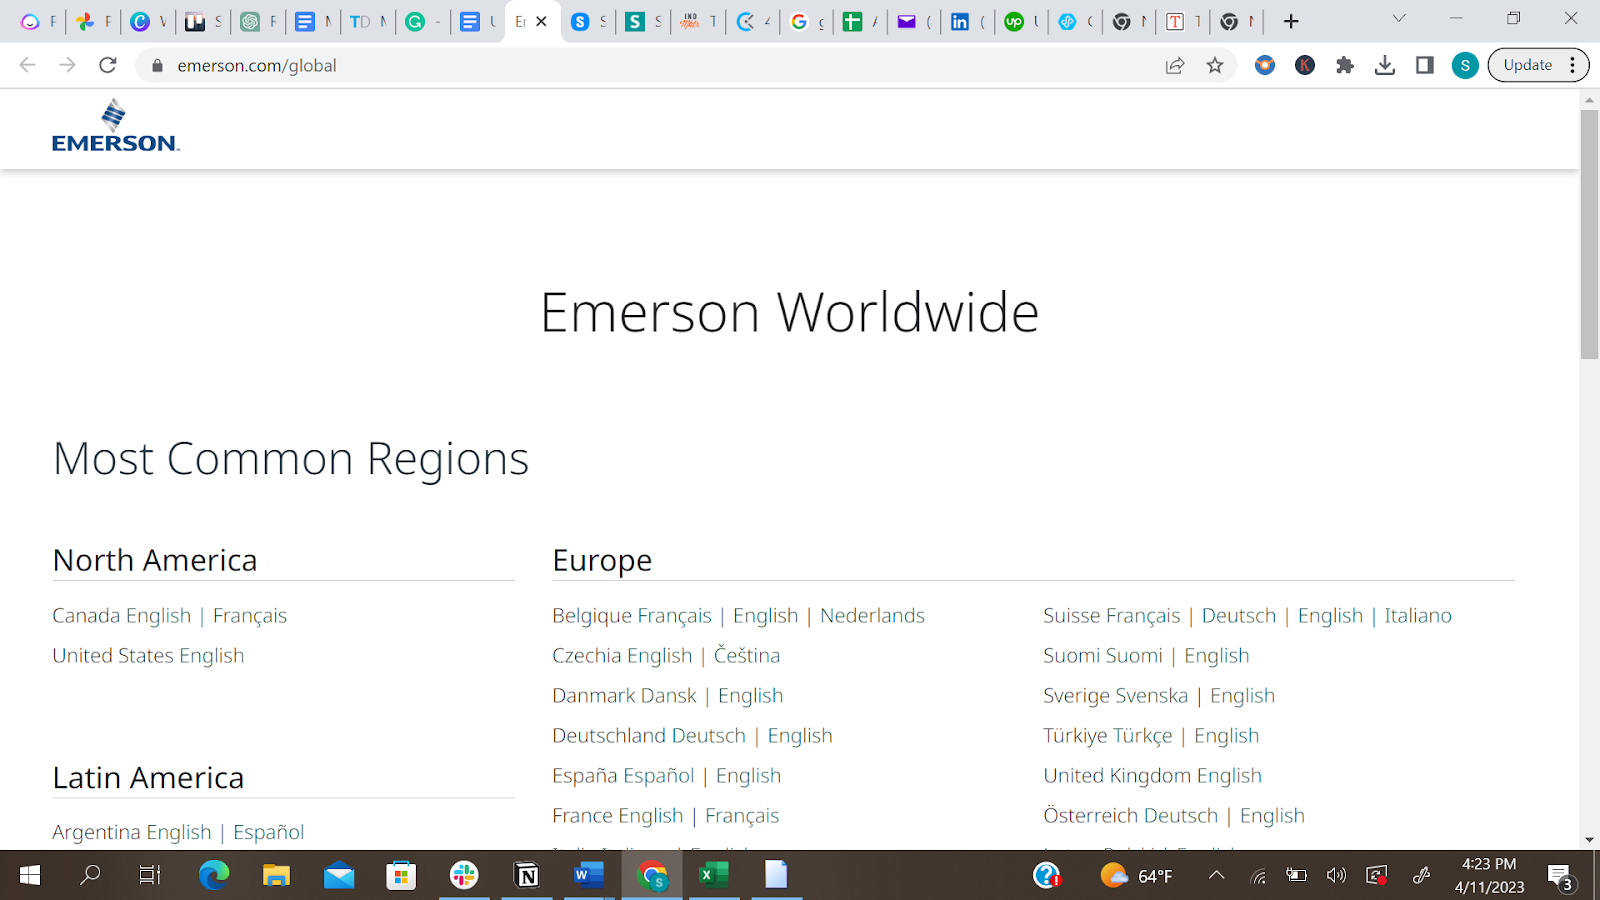 A representation of Emerson's website design